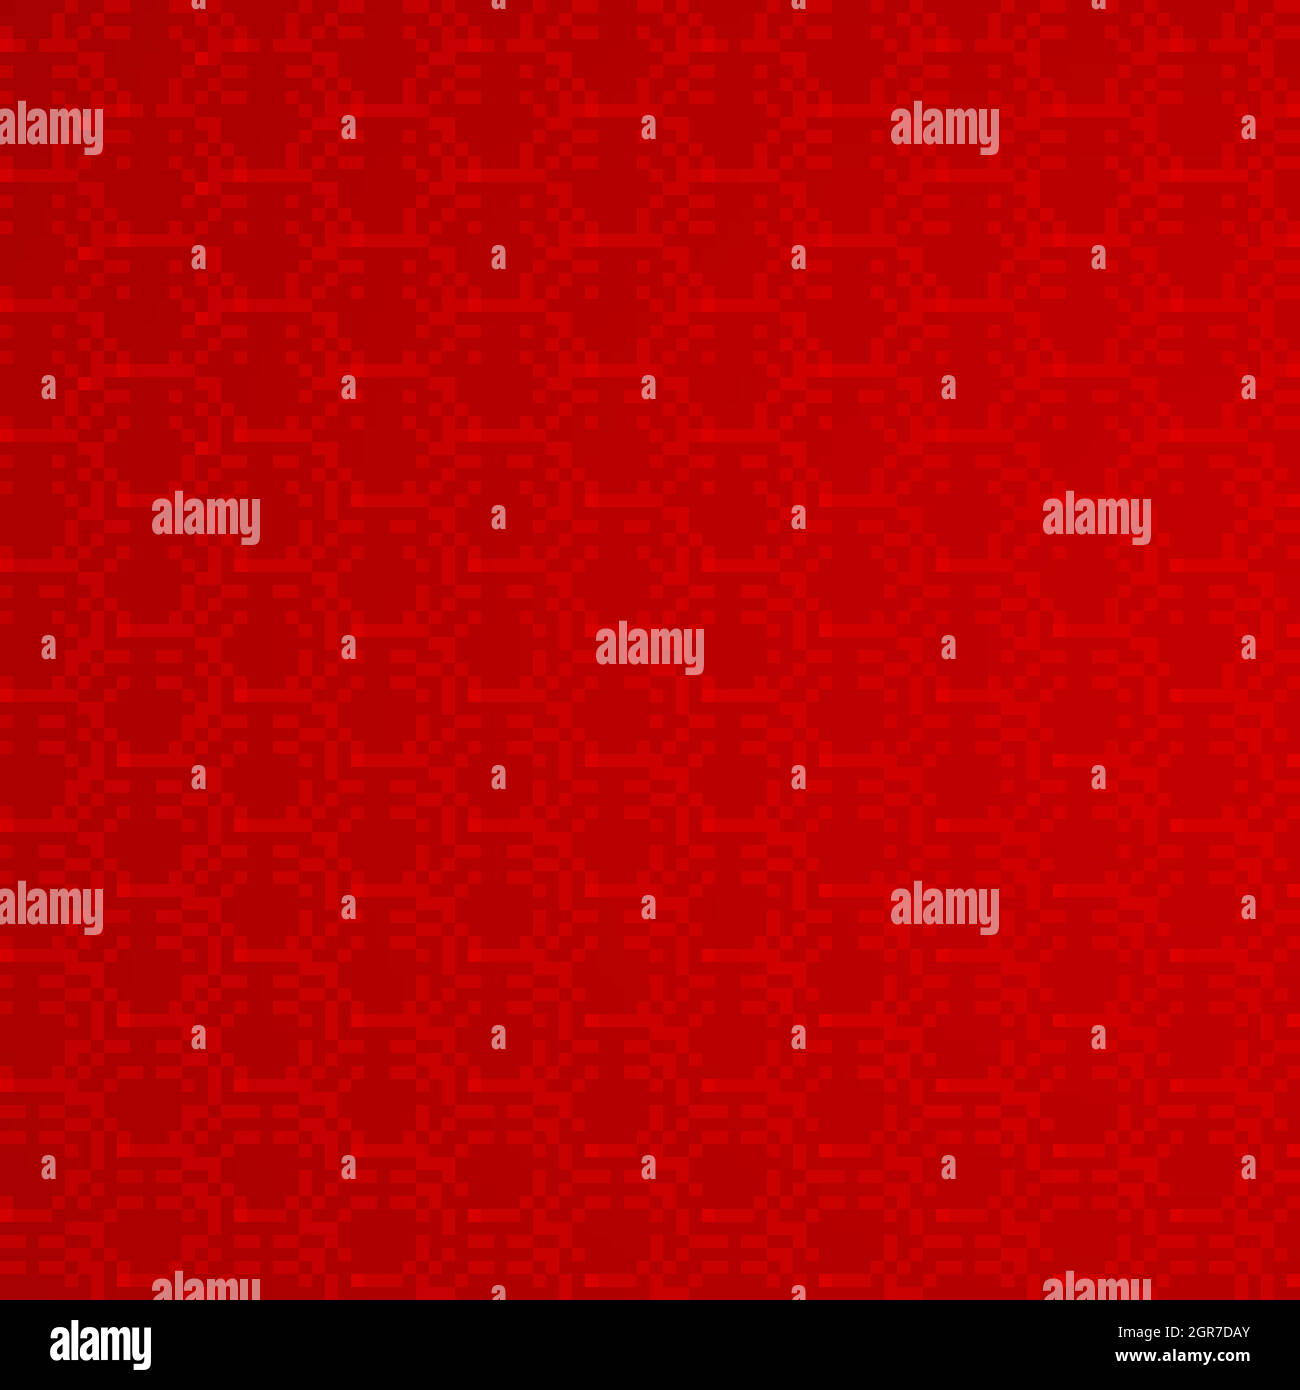 Roter Hintergrund mit abstrakten Mustern Stock Vektor